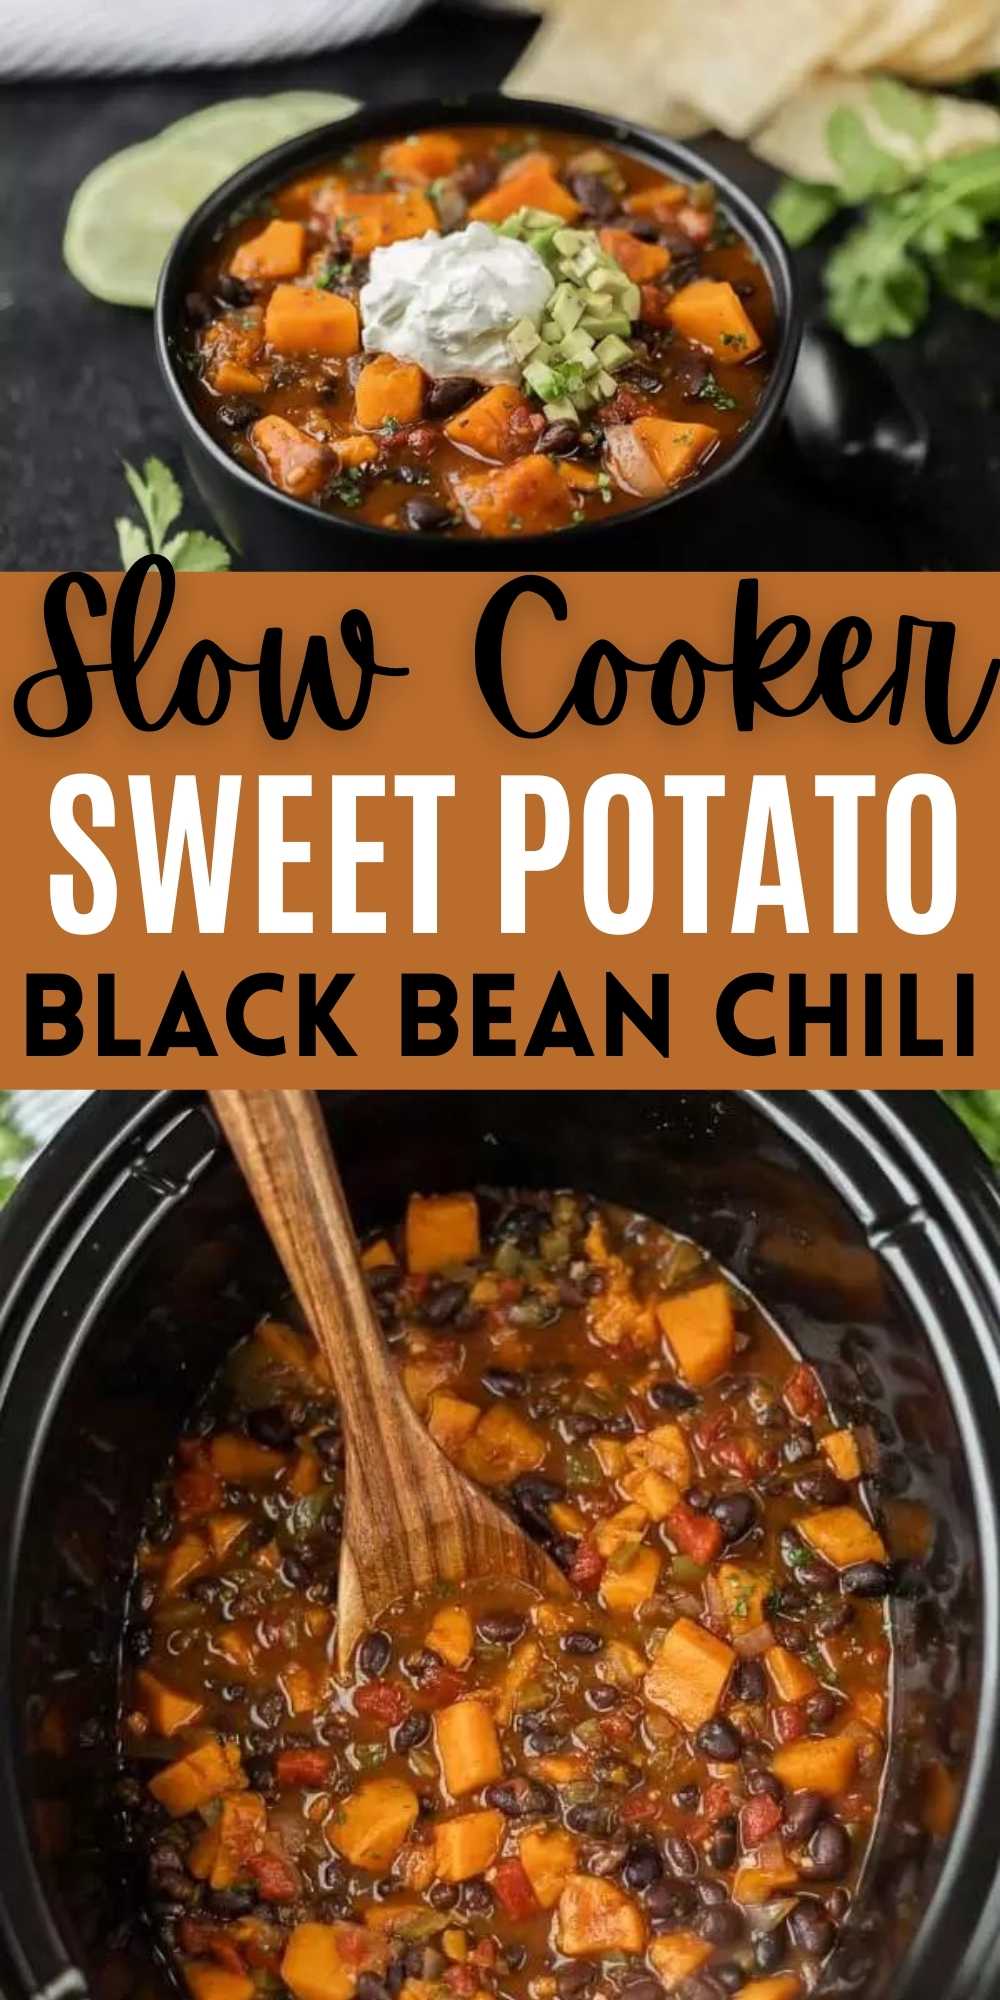 Crock Pot Beefy Black Bean Chili